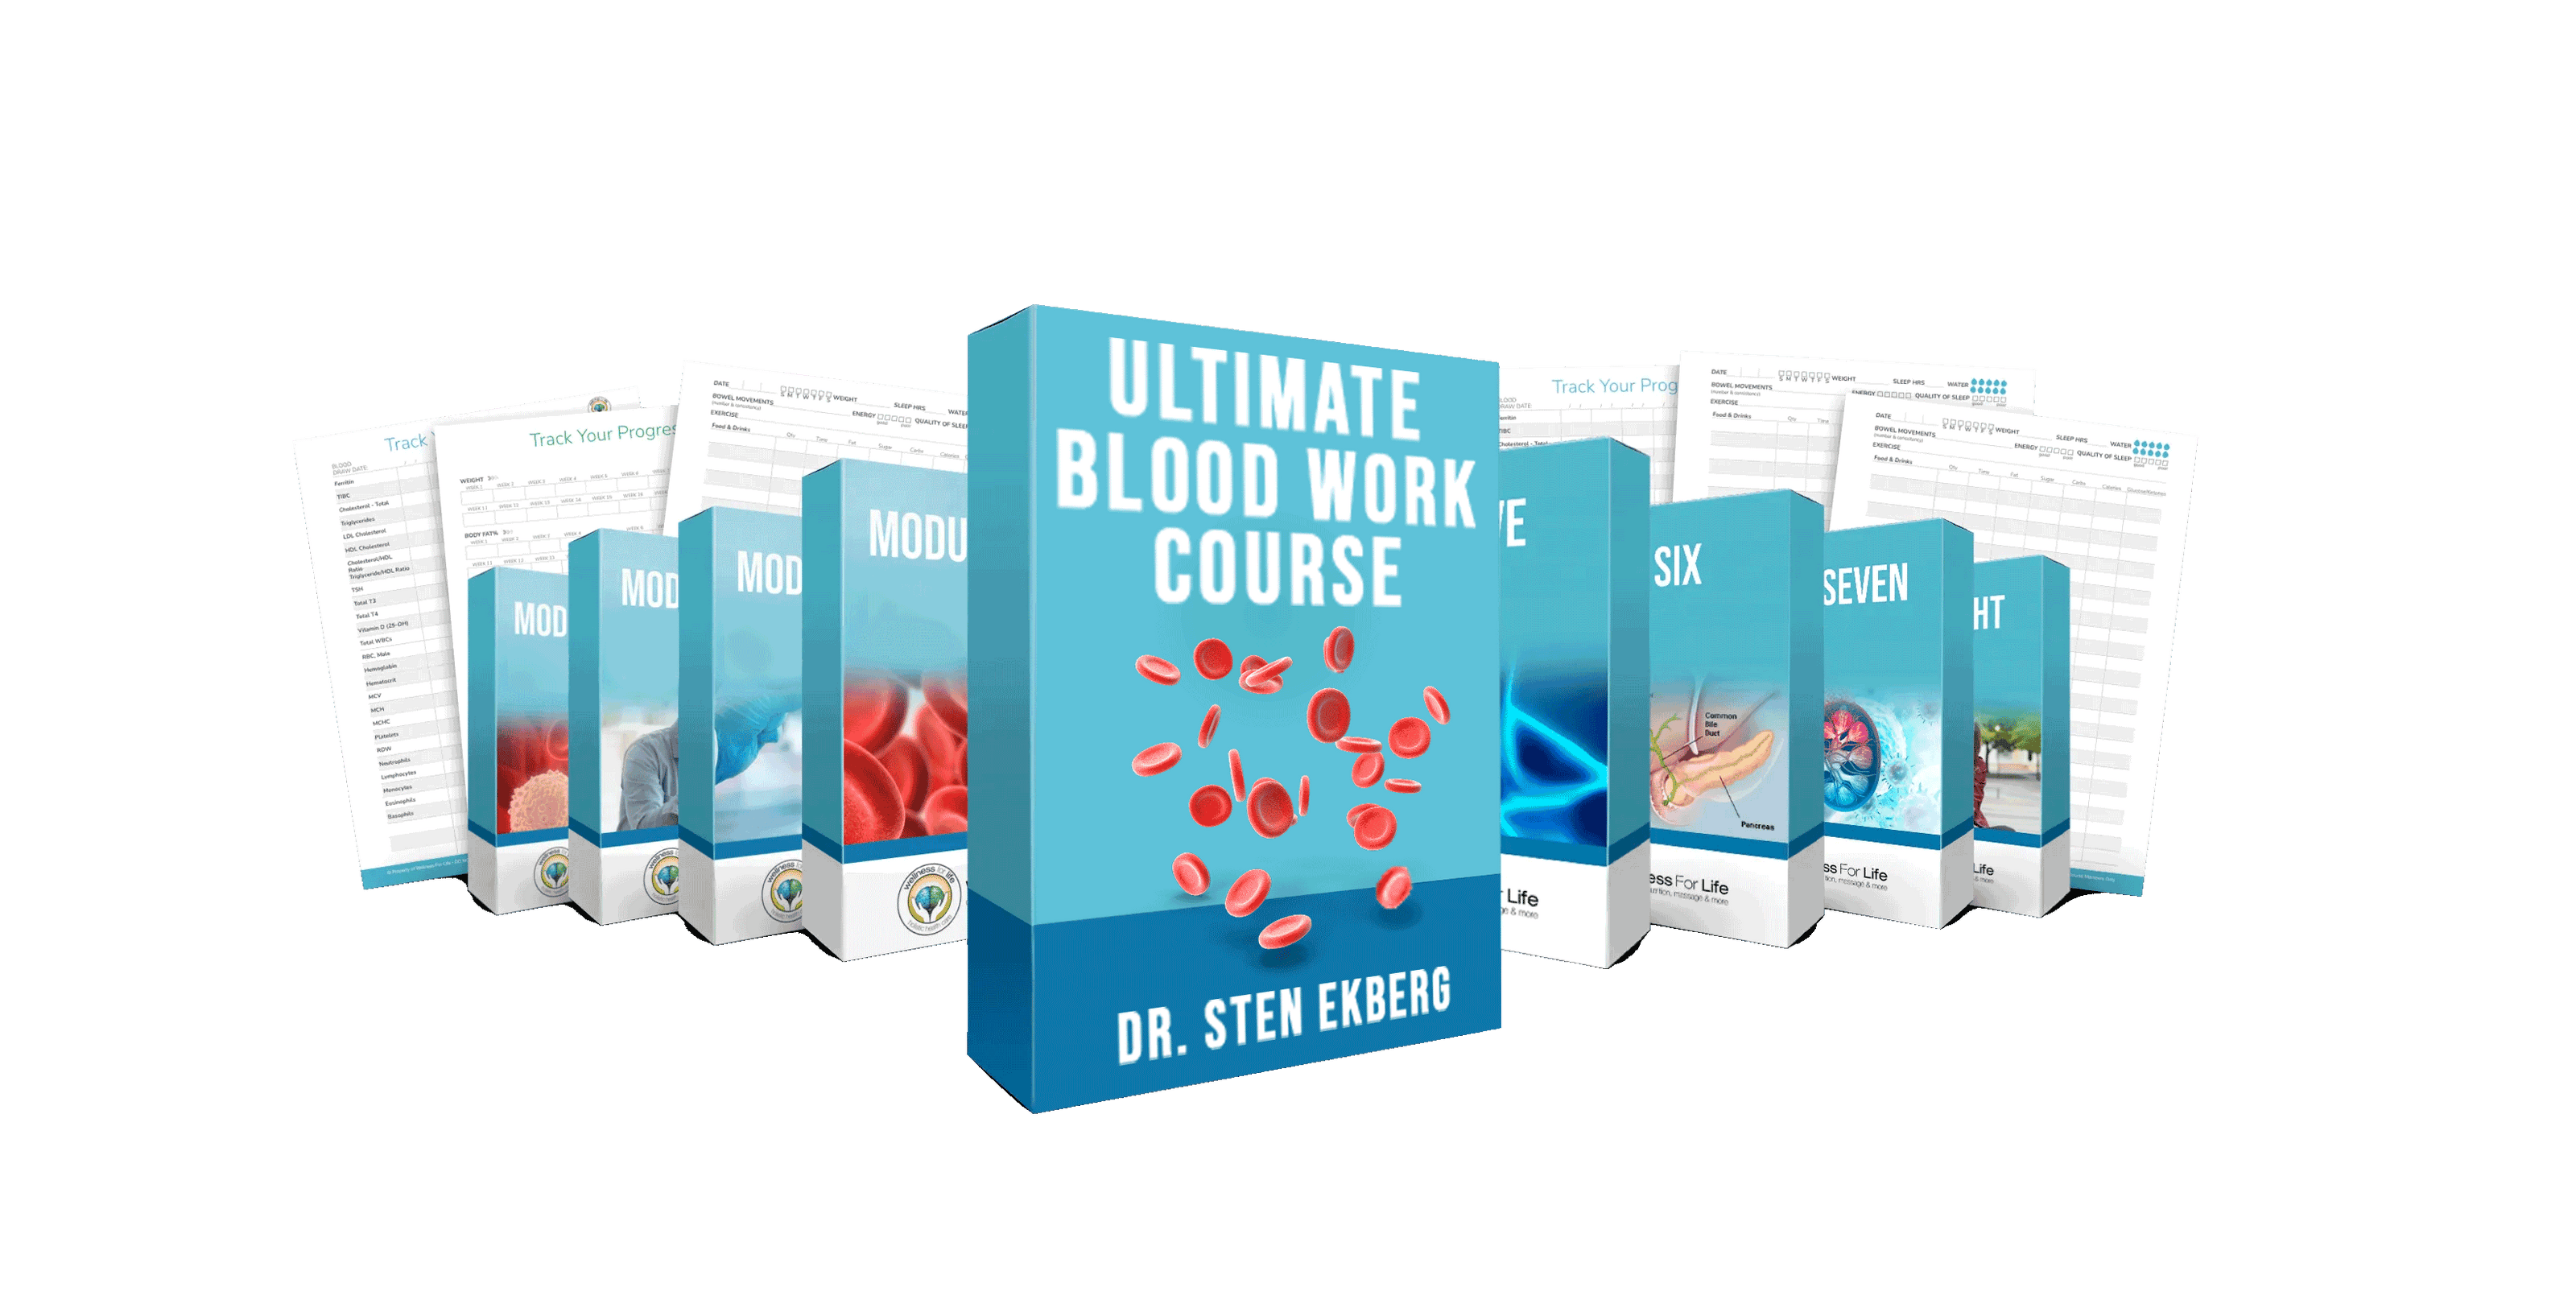 Dr. Ekberg's Ultimate Blood Work Course